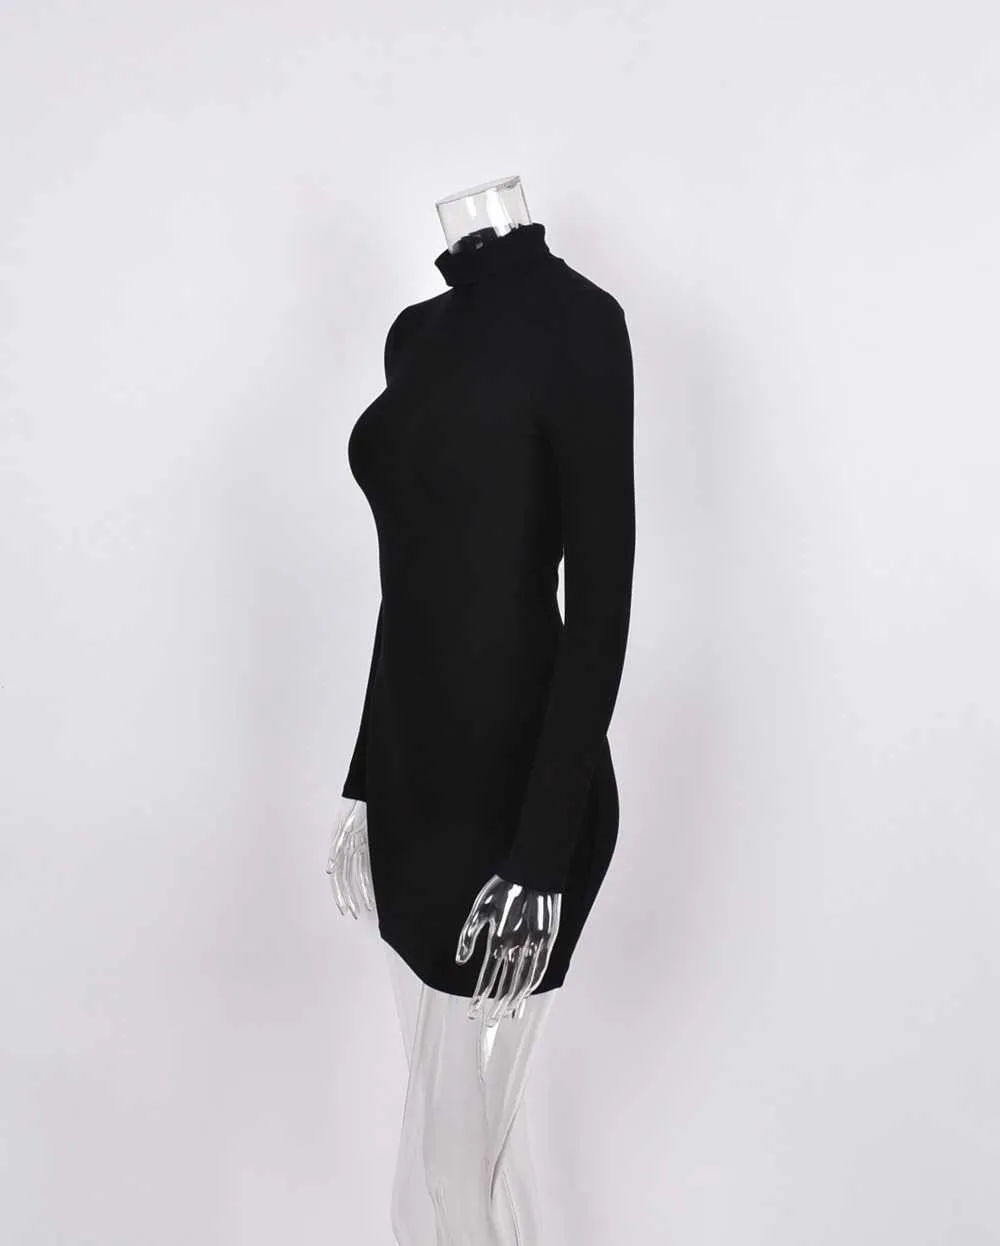 Summer New Women's Wear Black High Collar Long Sleeve Outdoor Sports Sexy Tight Mini Short Dress Y0823